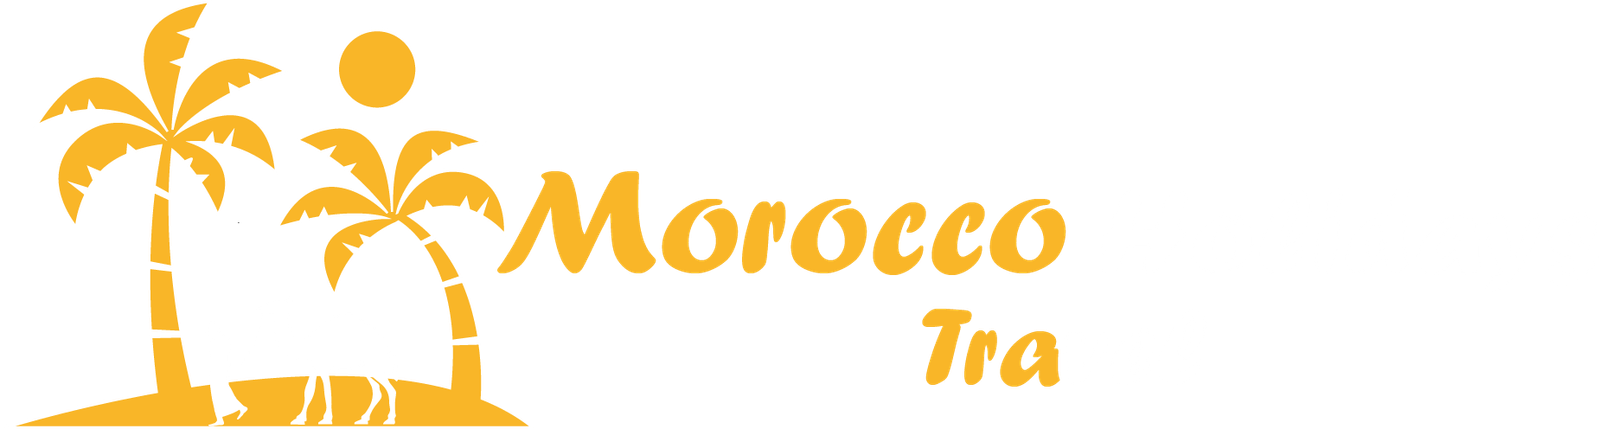 Morocco holidays travel